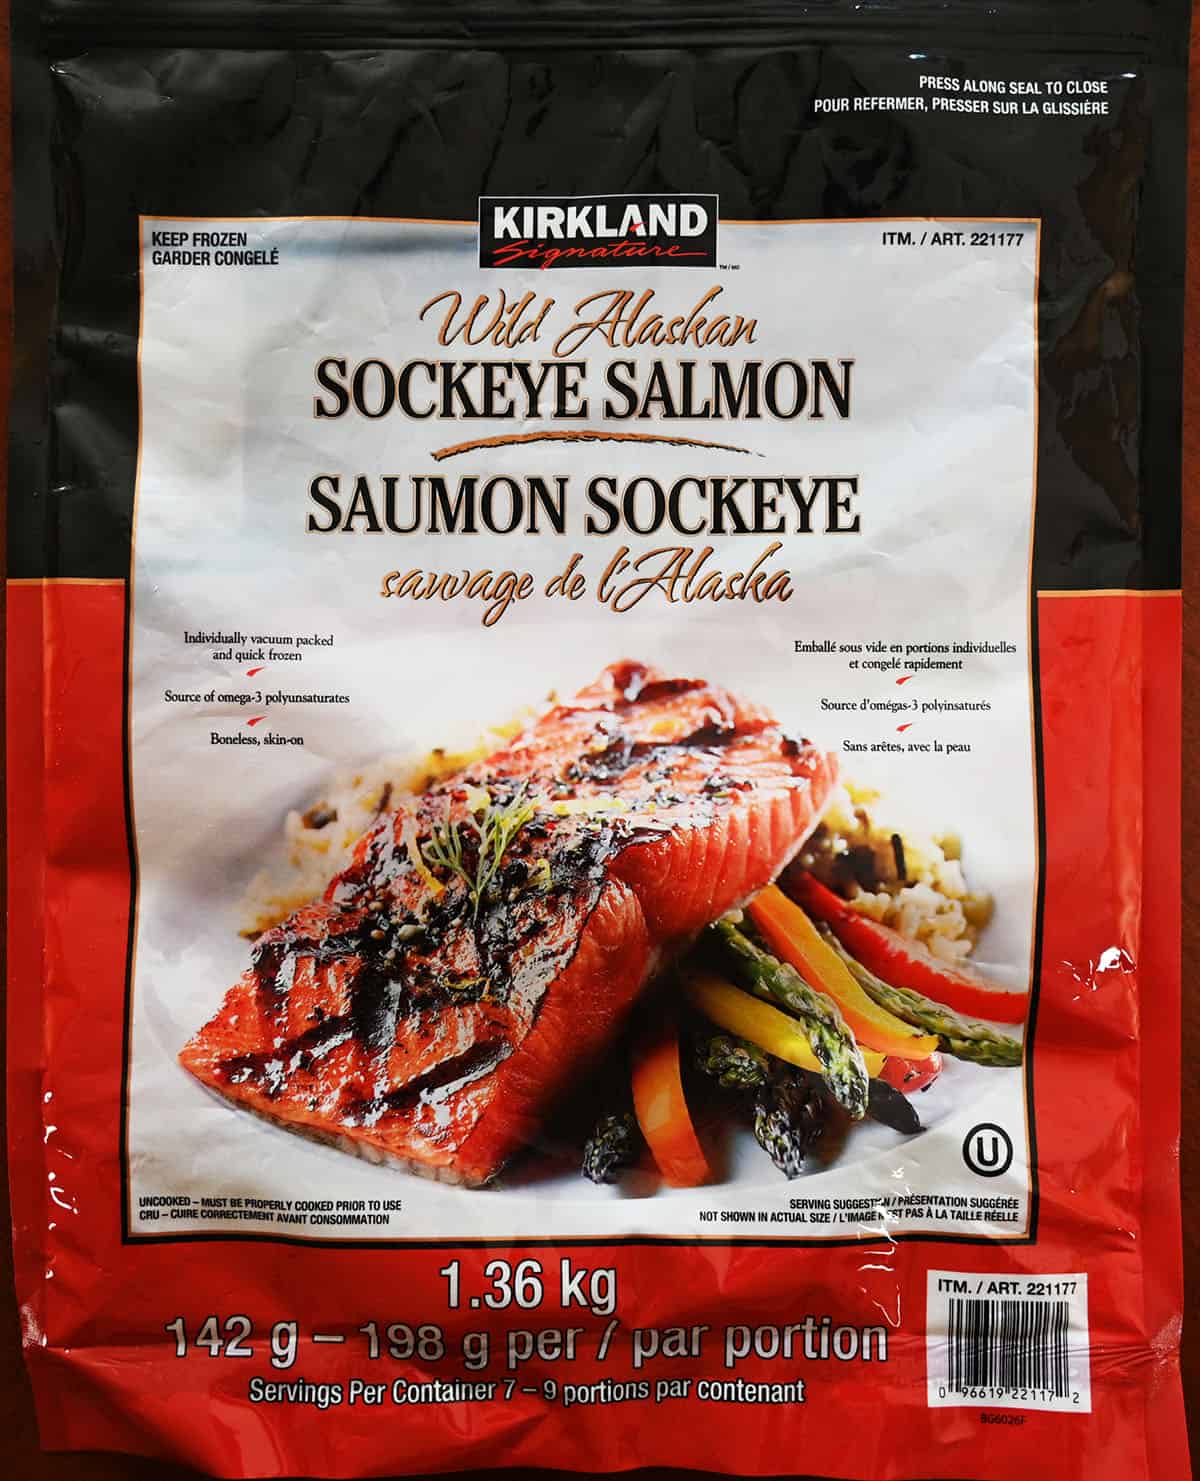 Costco Kirkland Signature Wild Alaskan Sockeye Salmon Review